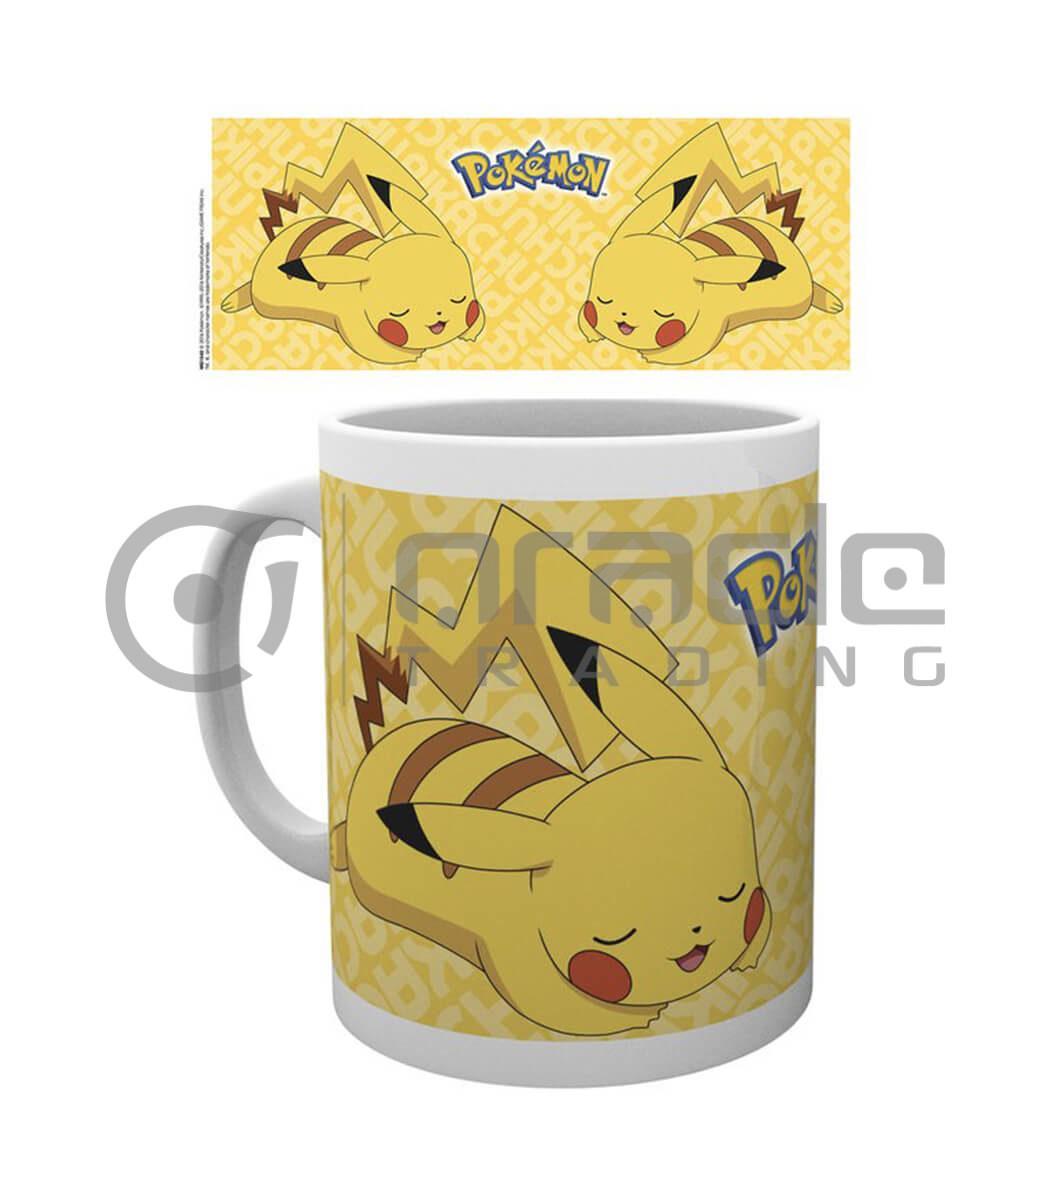 Pokémon Mug - Pikachu - Rest